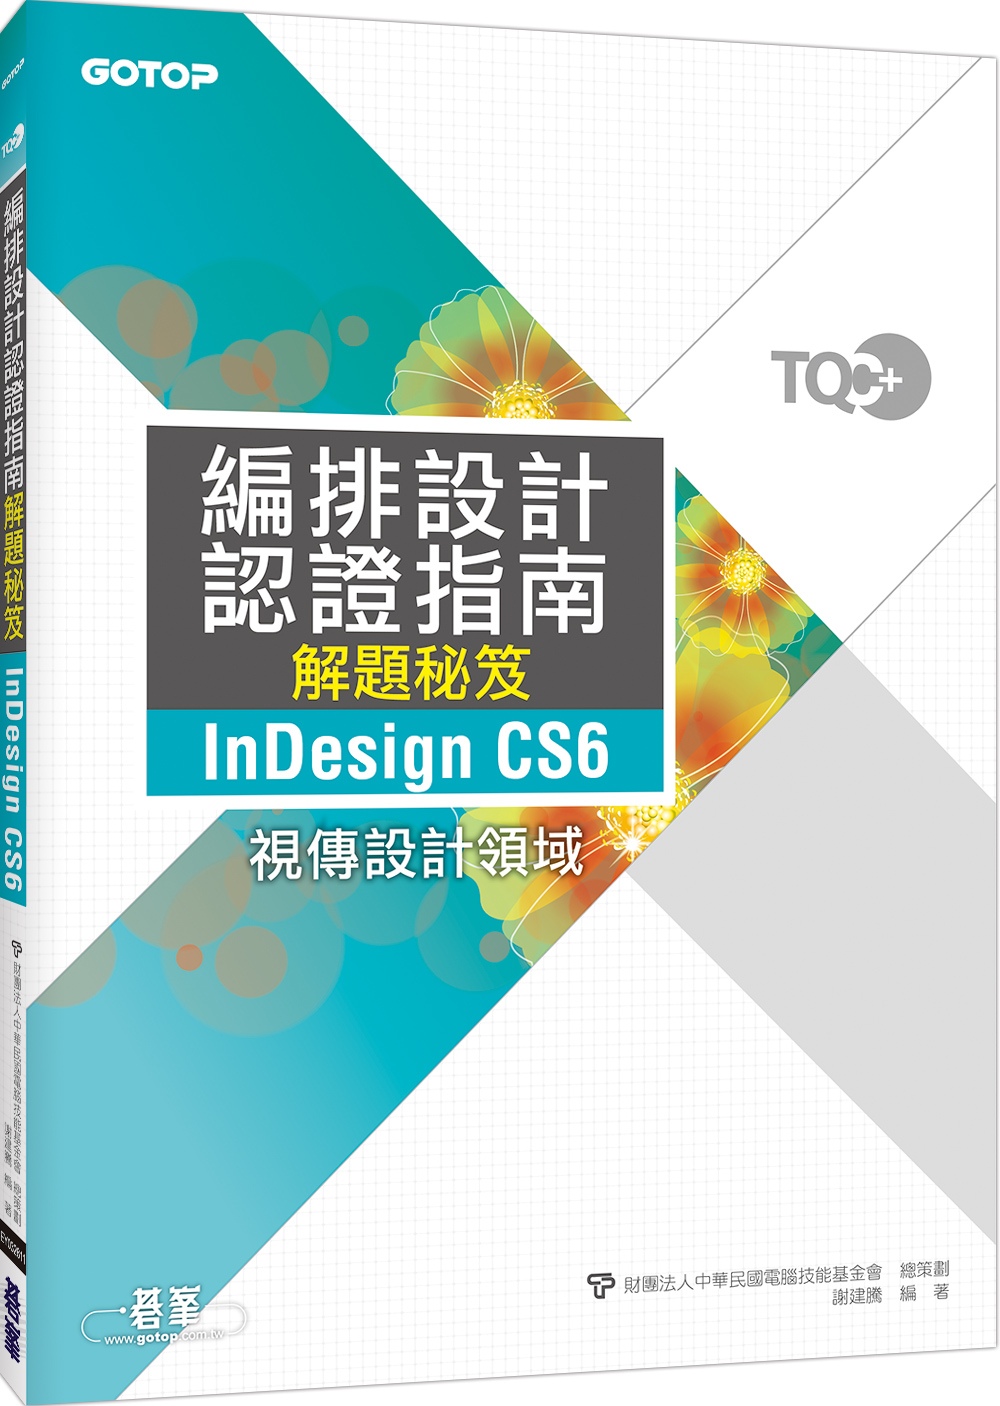 ►GO►最新優惠► 【書籍】TQC+編排設計認證指南解題秘笈 InDesign CS6